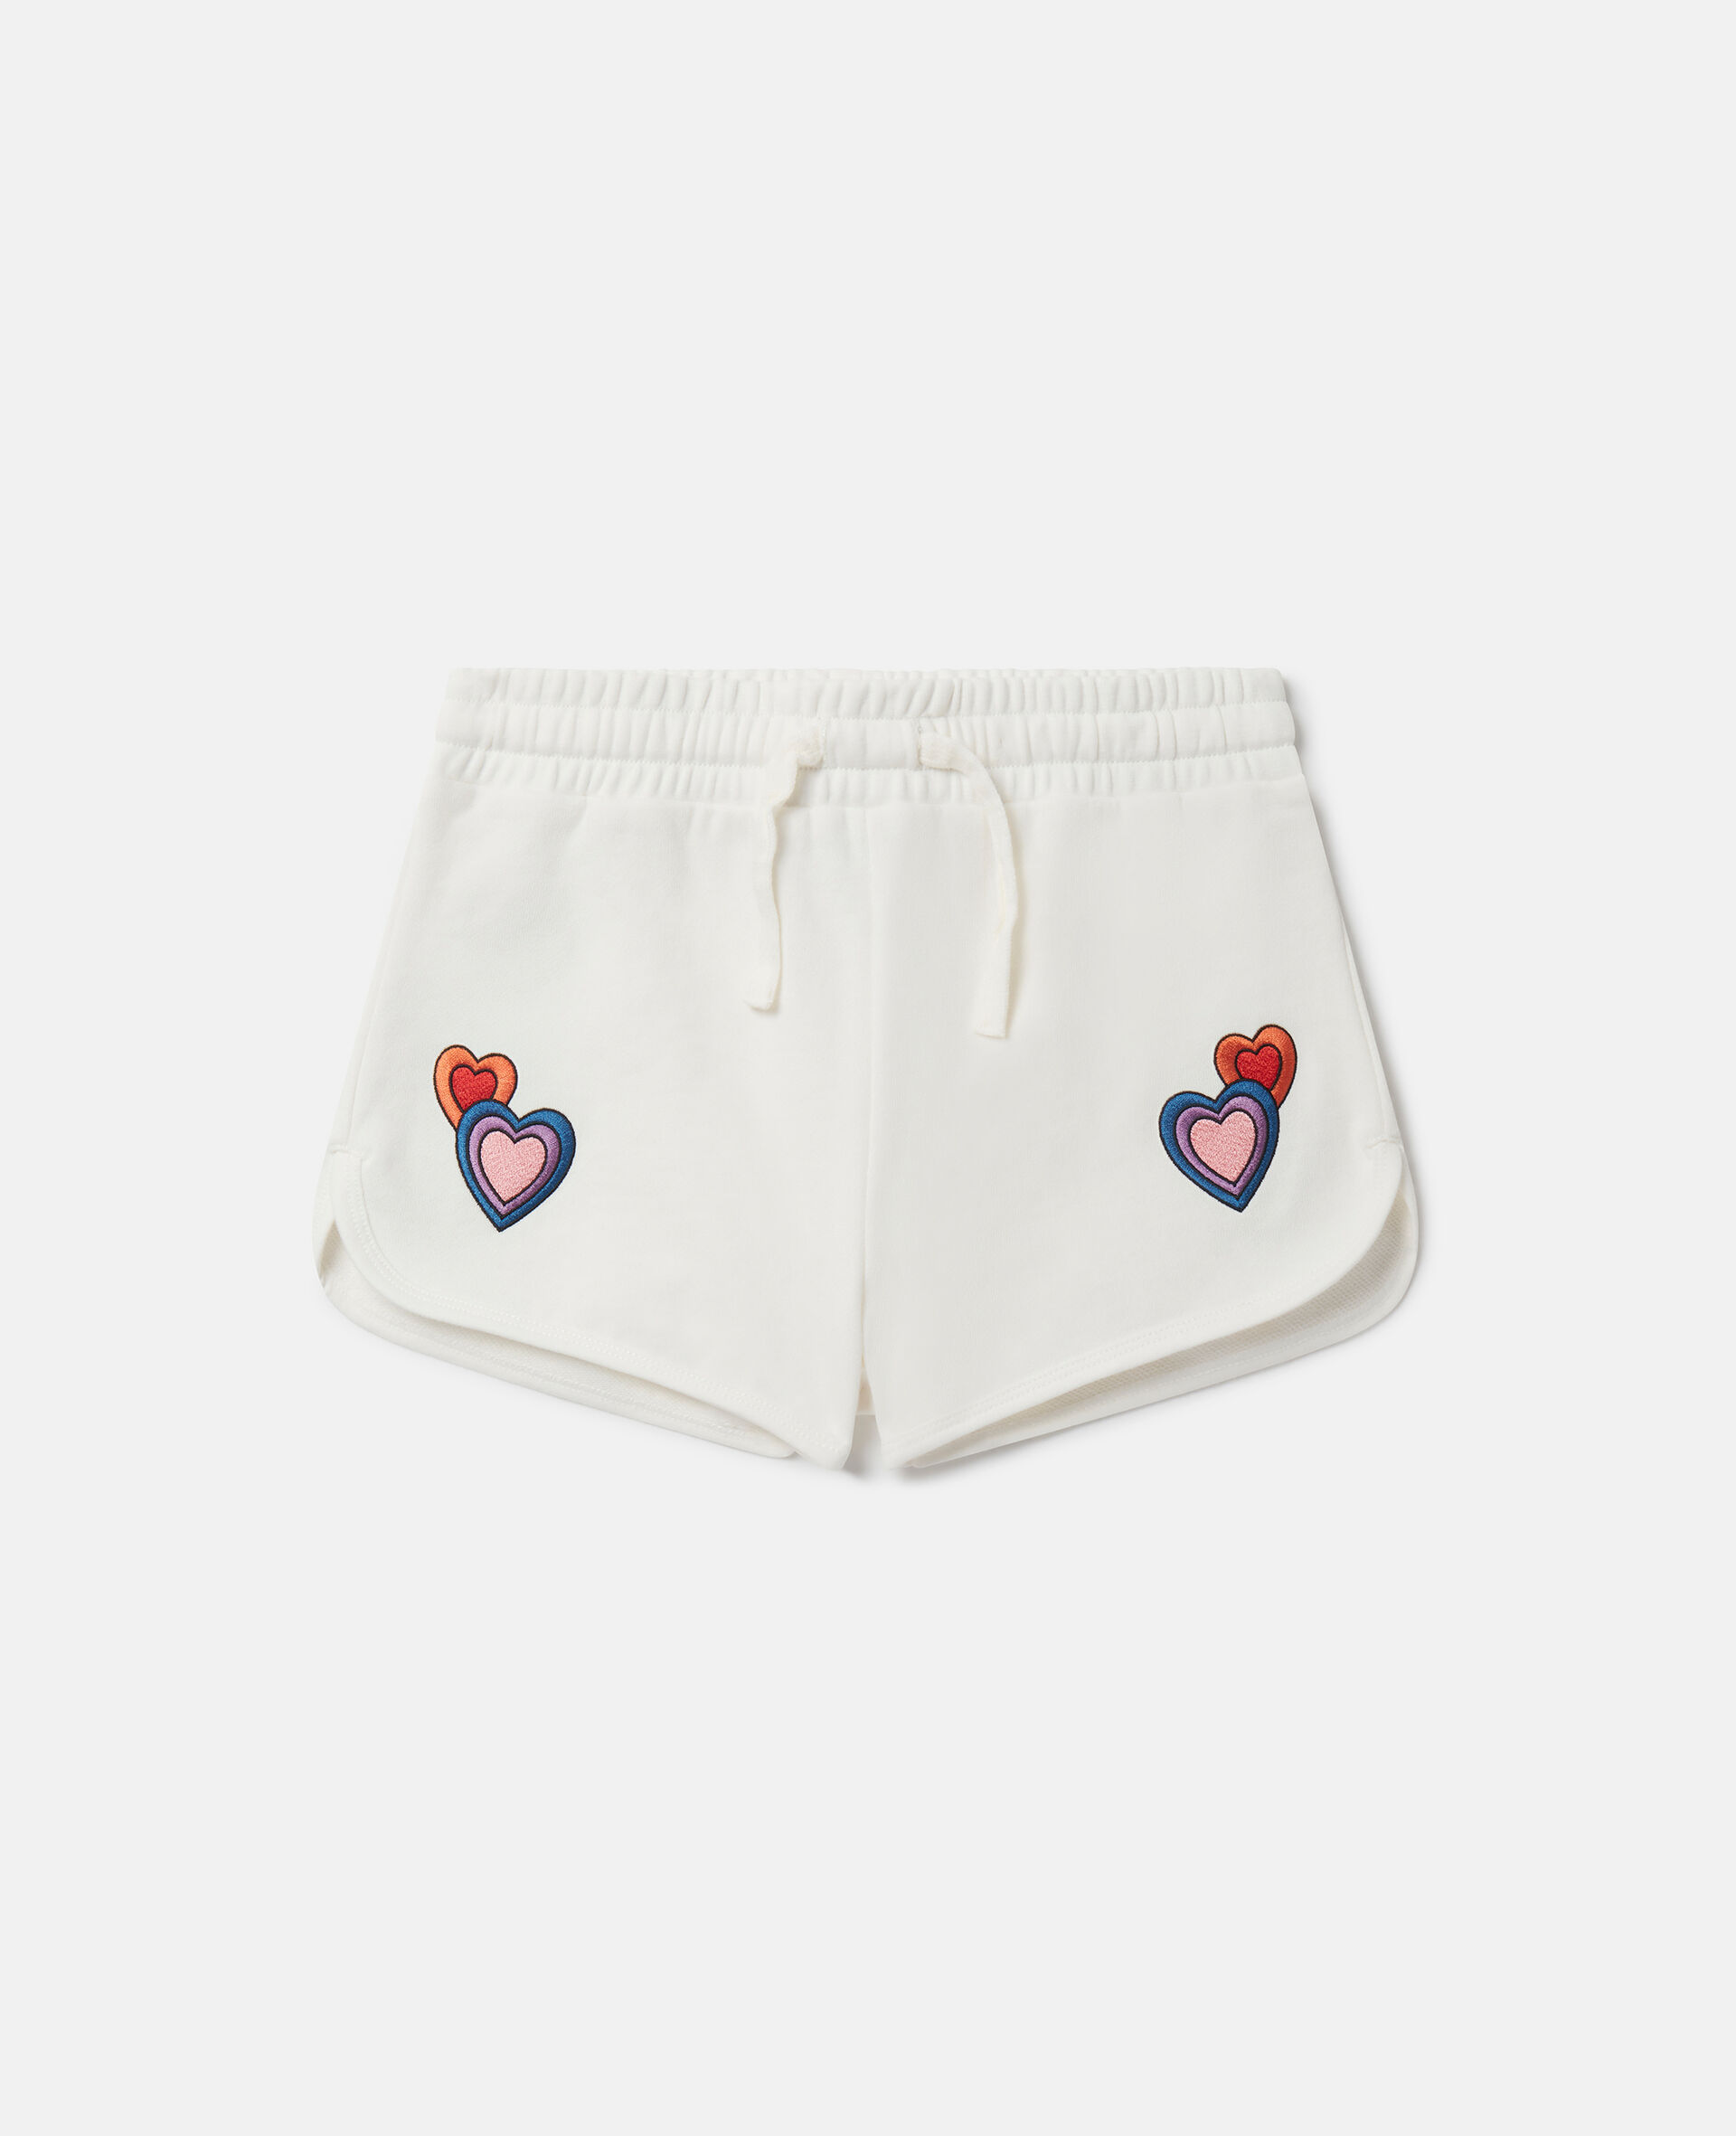 I Love You Embroidered Shorts-Multicoloured-medium